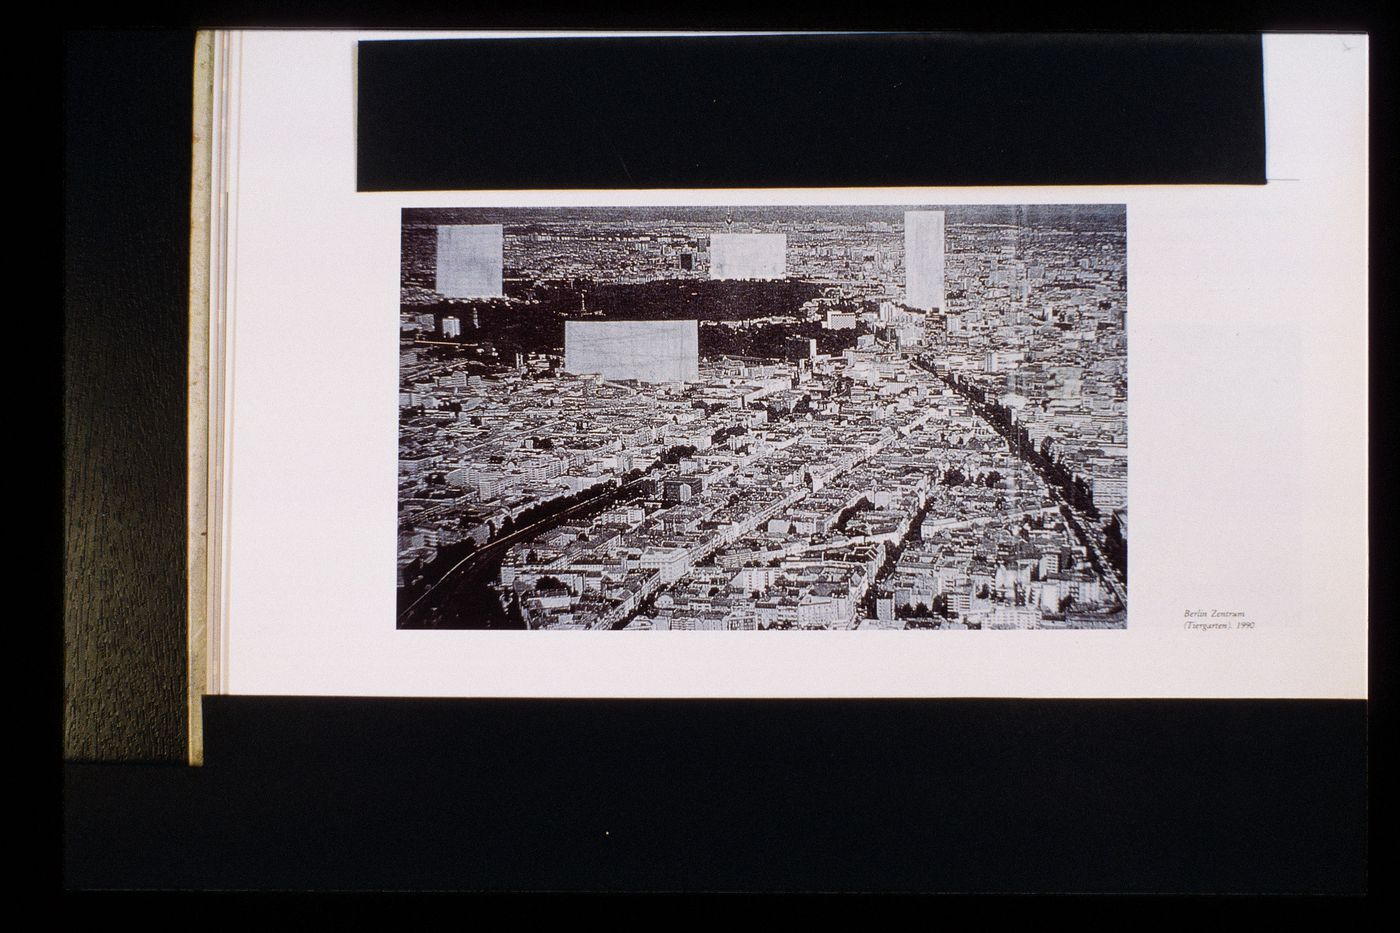 Slide of a photograph of Berlin Zentrum, Berlin, by Herzog & de Meuron